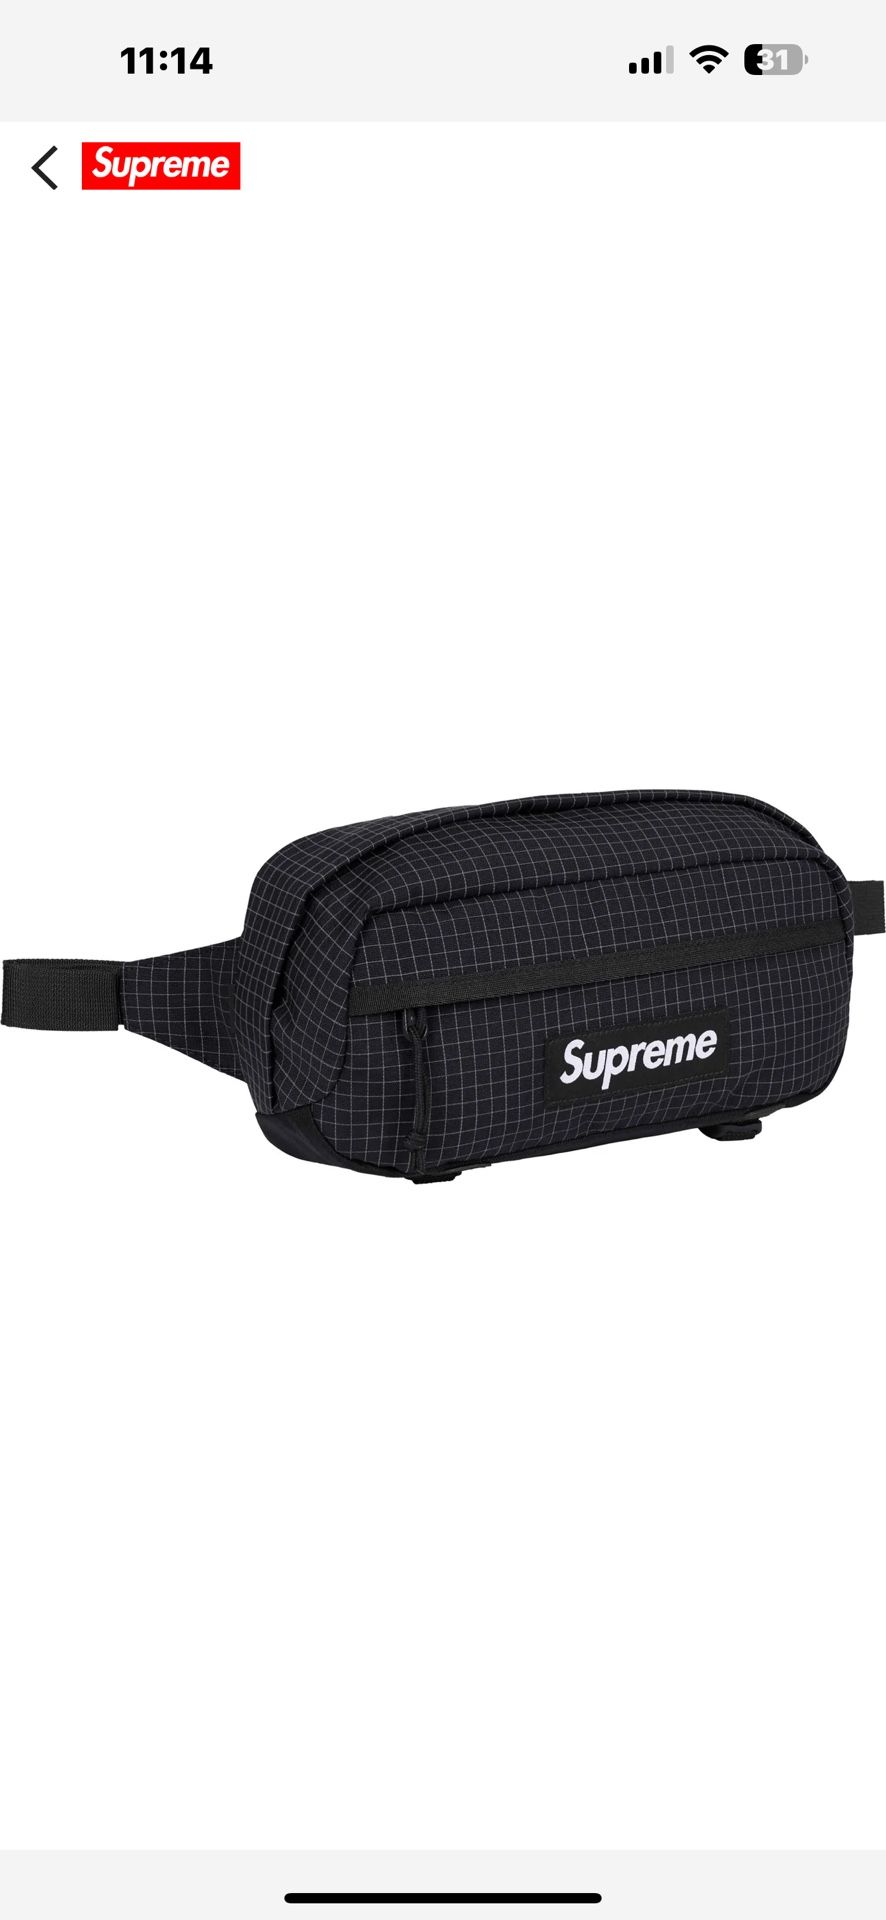 supreme waist bag & hat